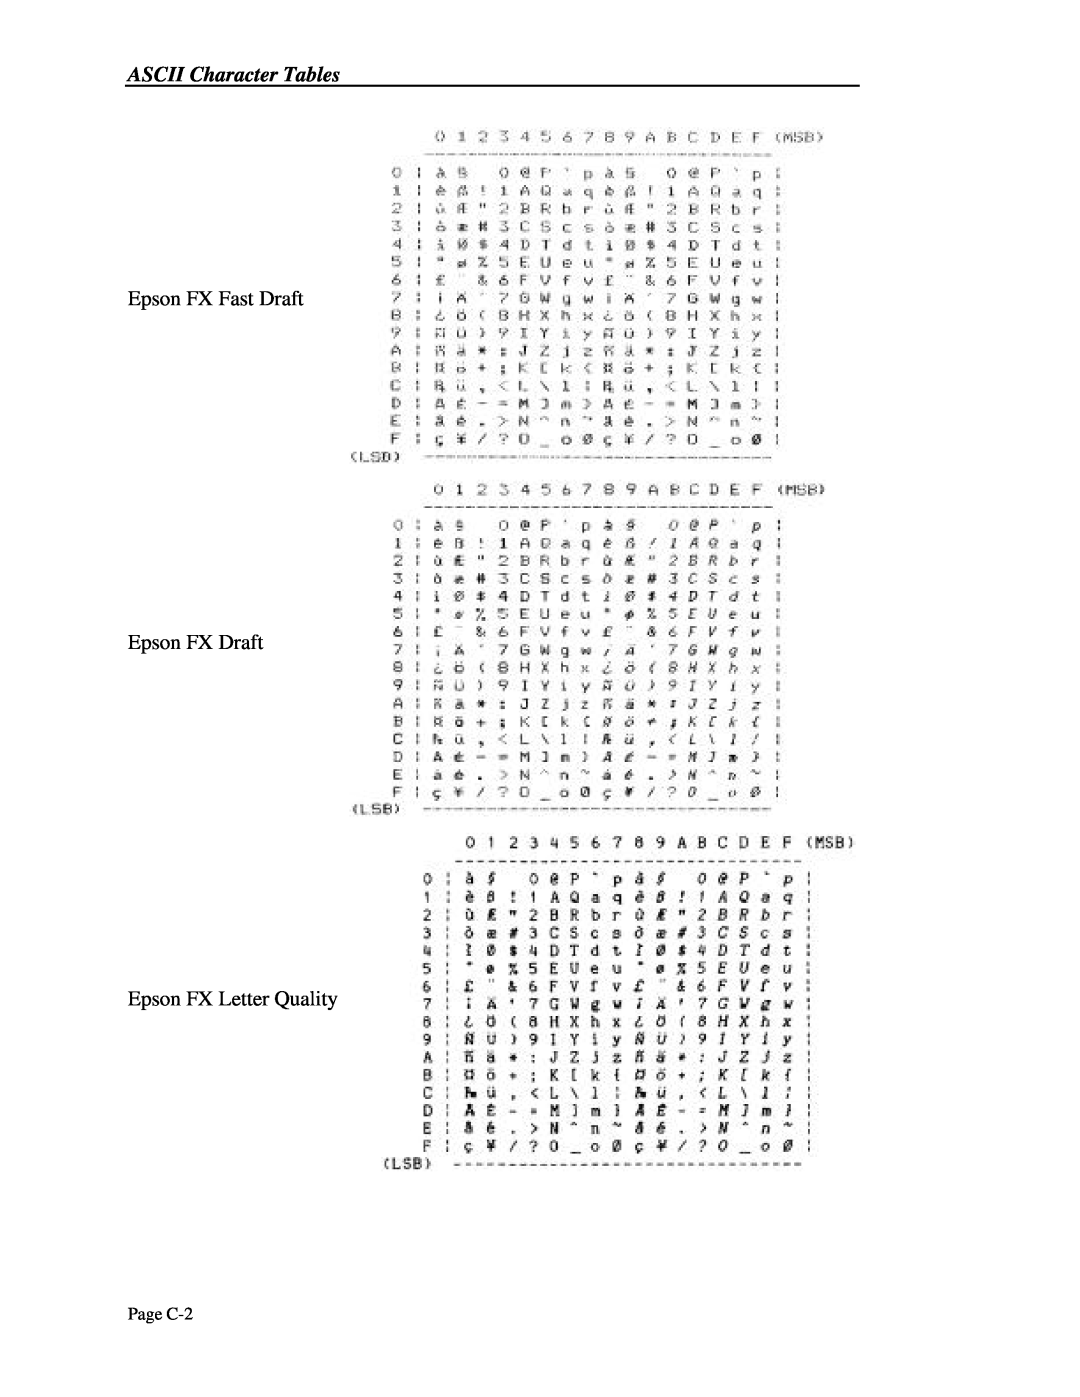 Printek 4503, 4300, 4500 manual ASCII Character Tables, Epson FX Fast Draft Epson FX Draft Epson FX Letter Quality, Page C-2 